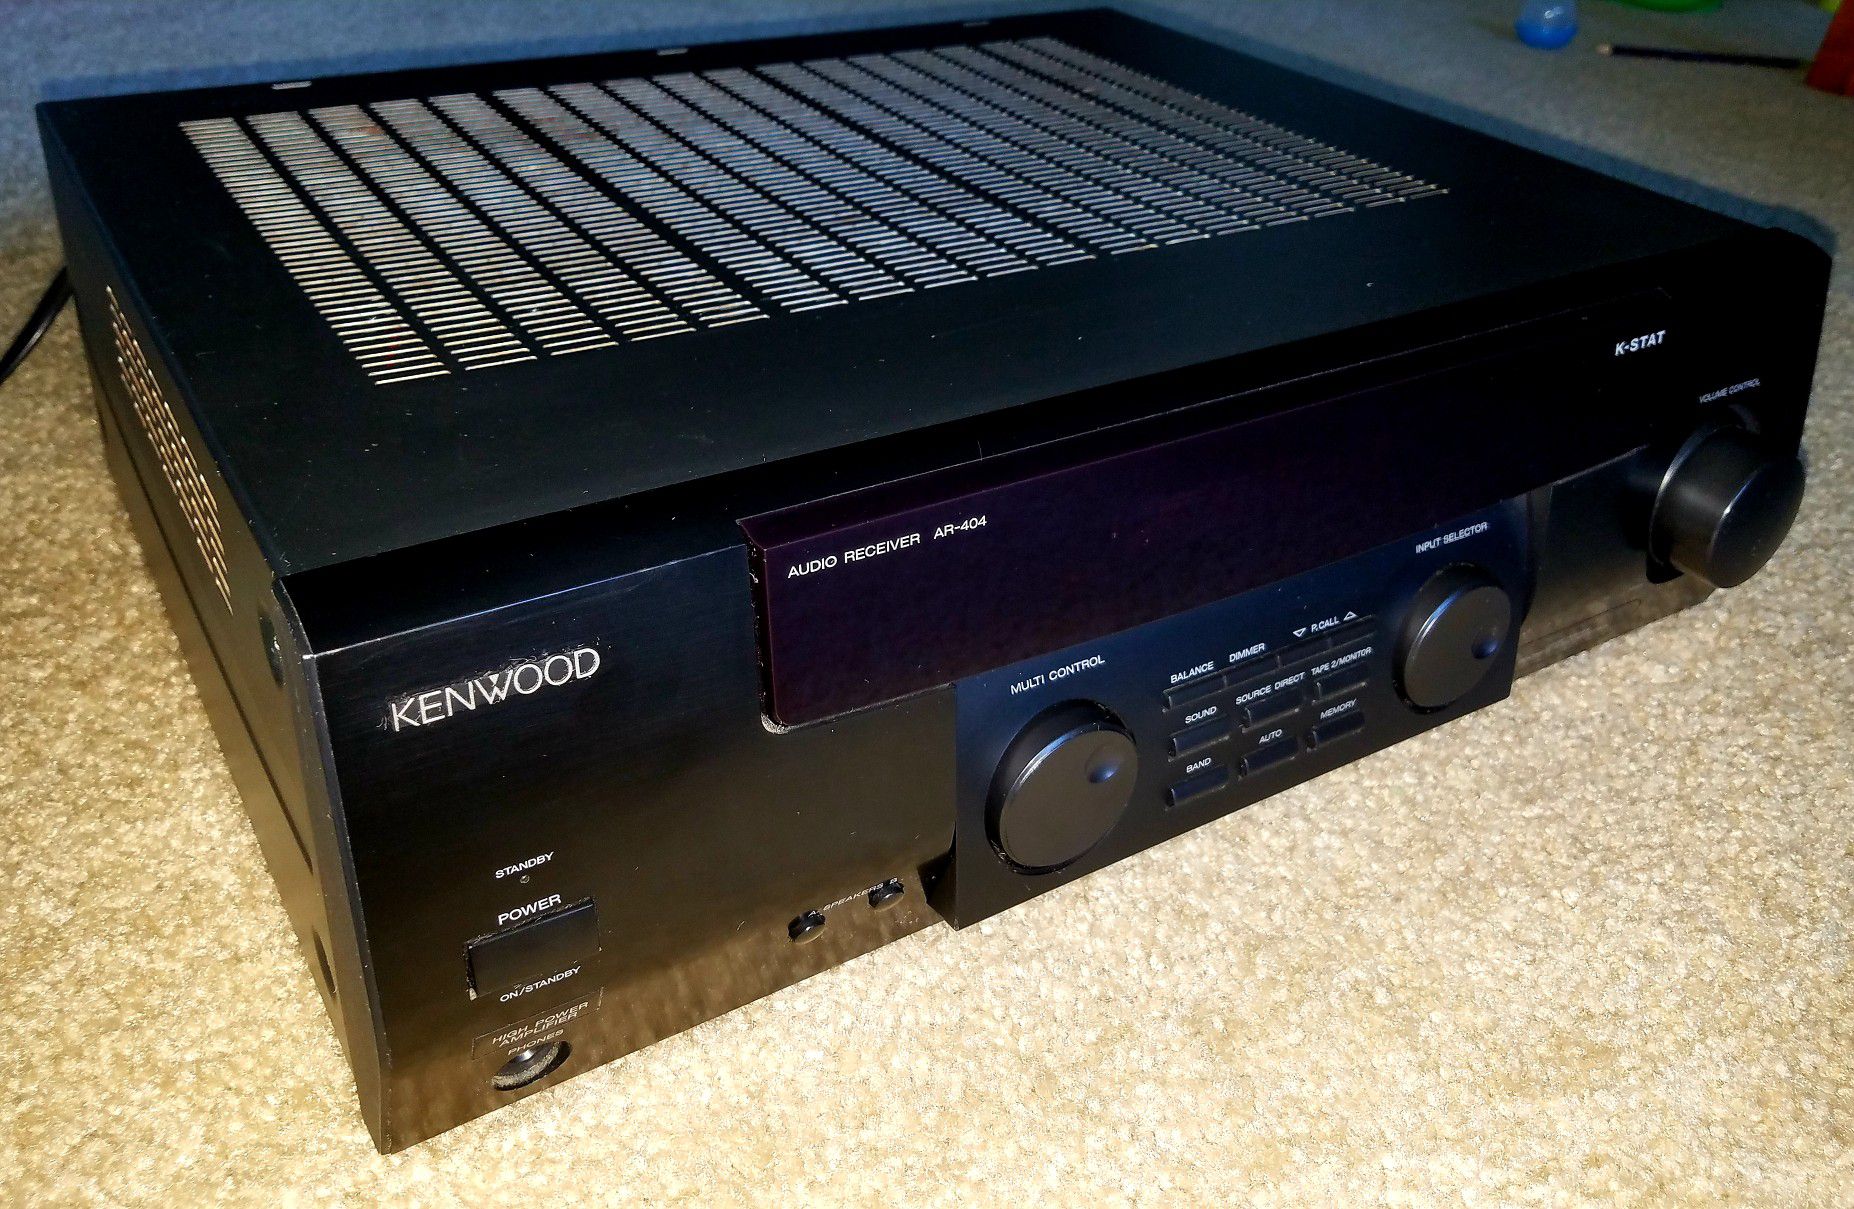 KENWOOD audio receiver